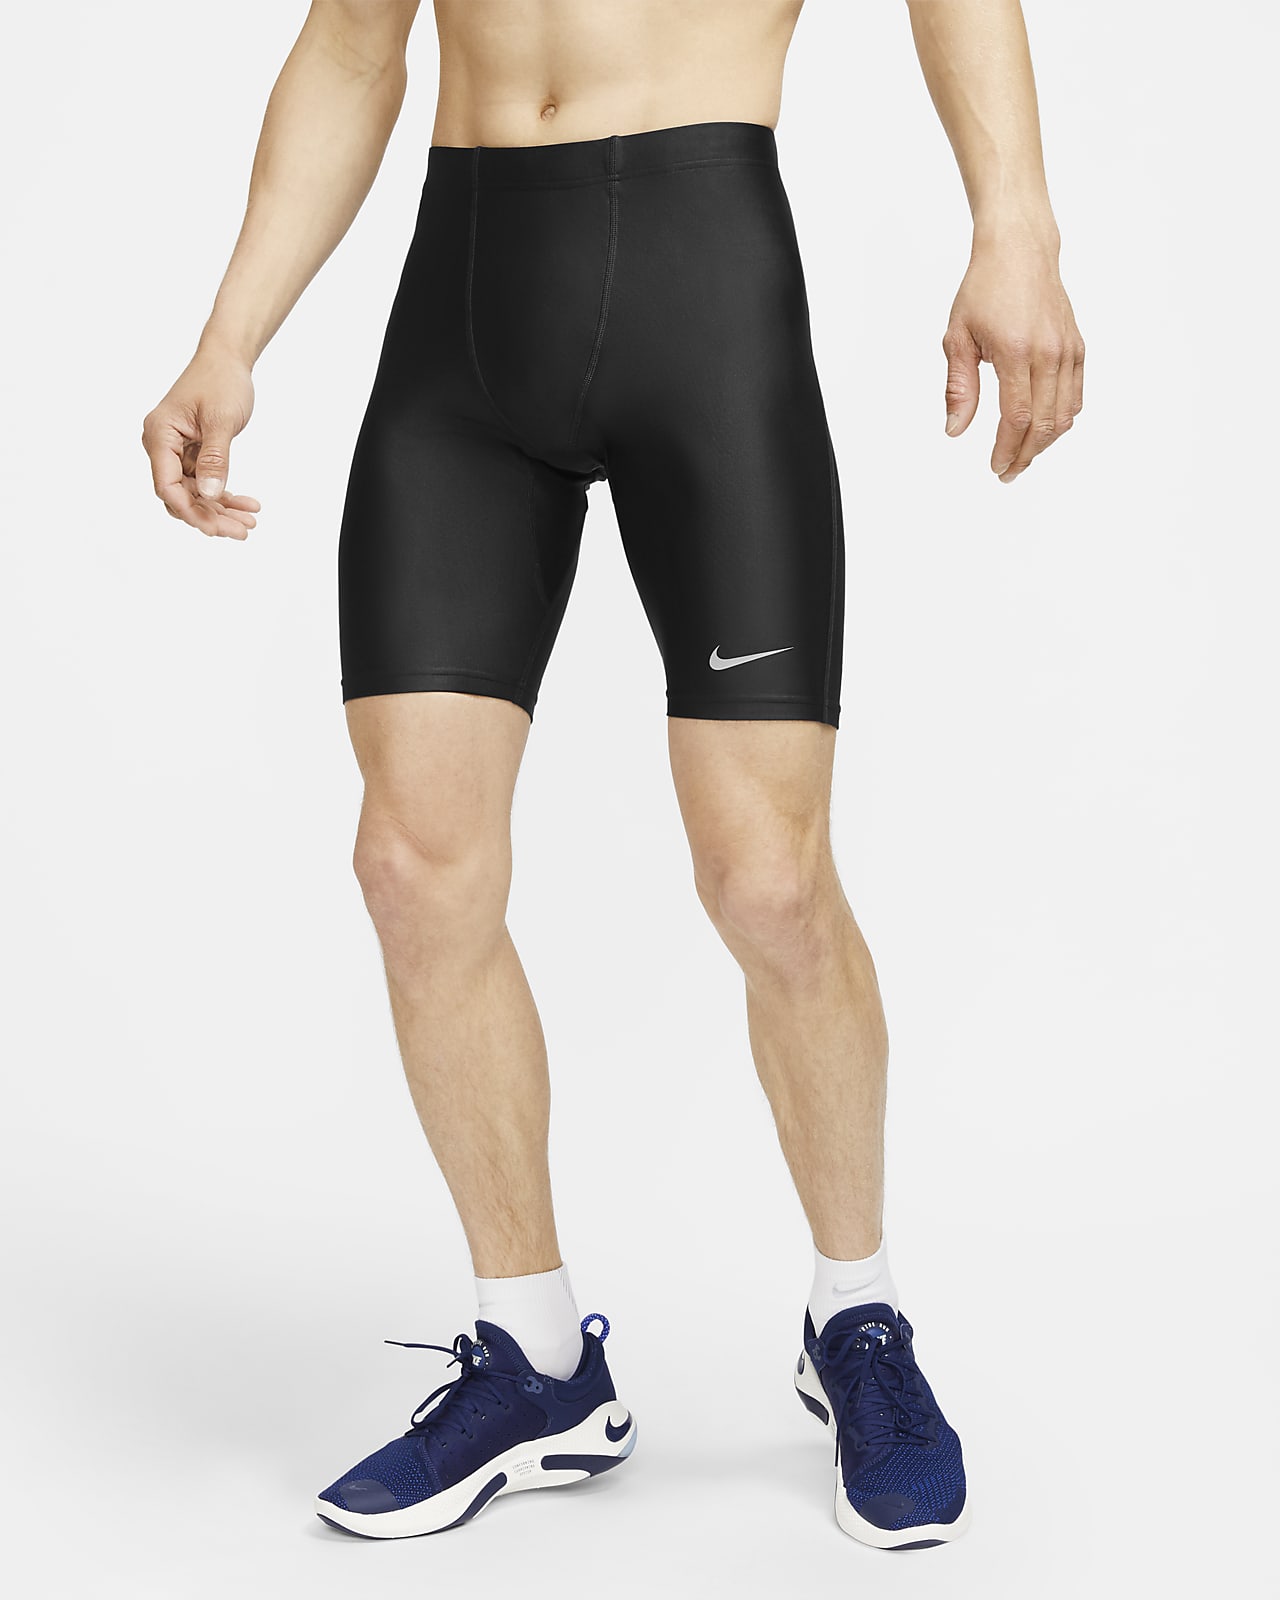 2-Length Running Shorts. Nike JP